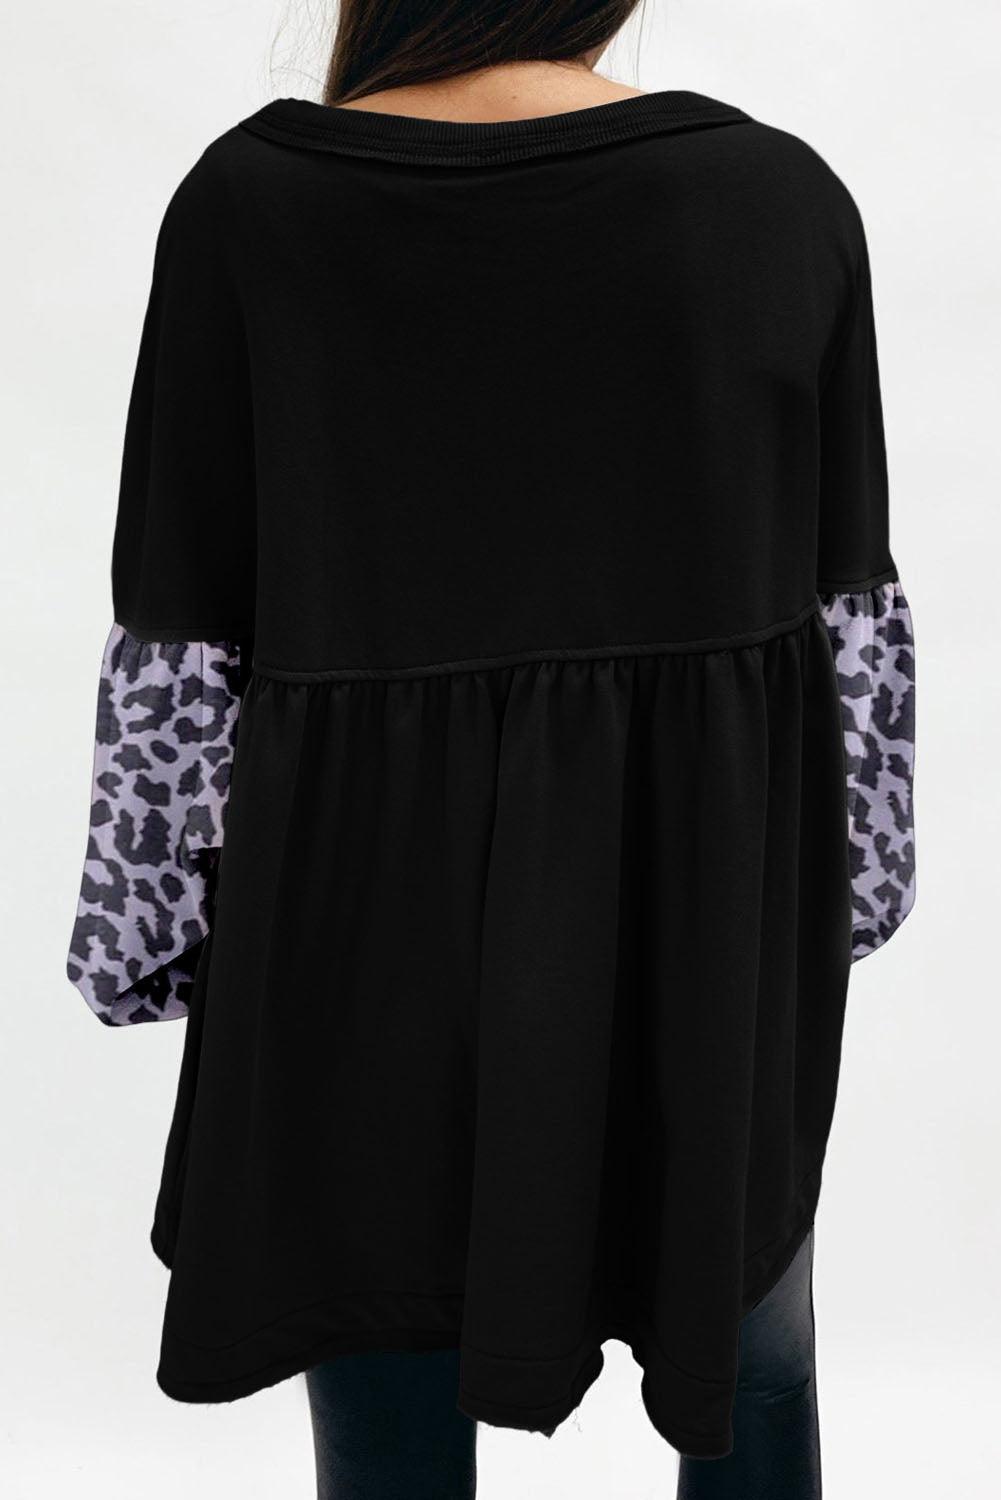 Black Leopard Splicing Sleeve Ruffle Loose Sweatshirt - L & M Kee, LLC